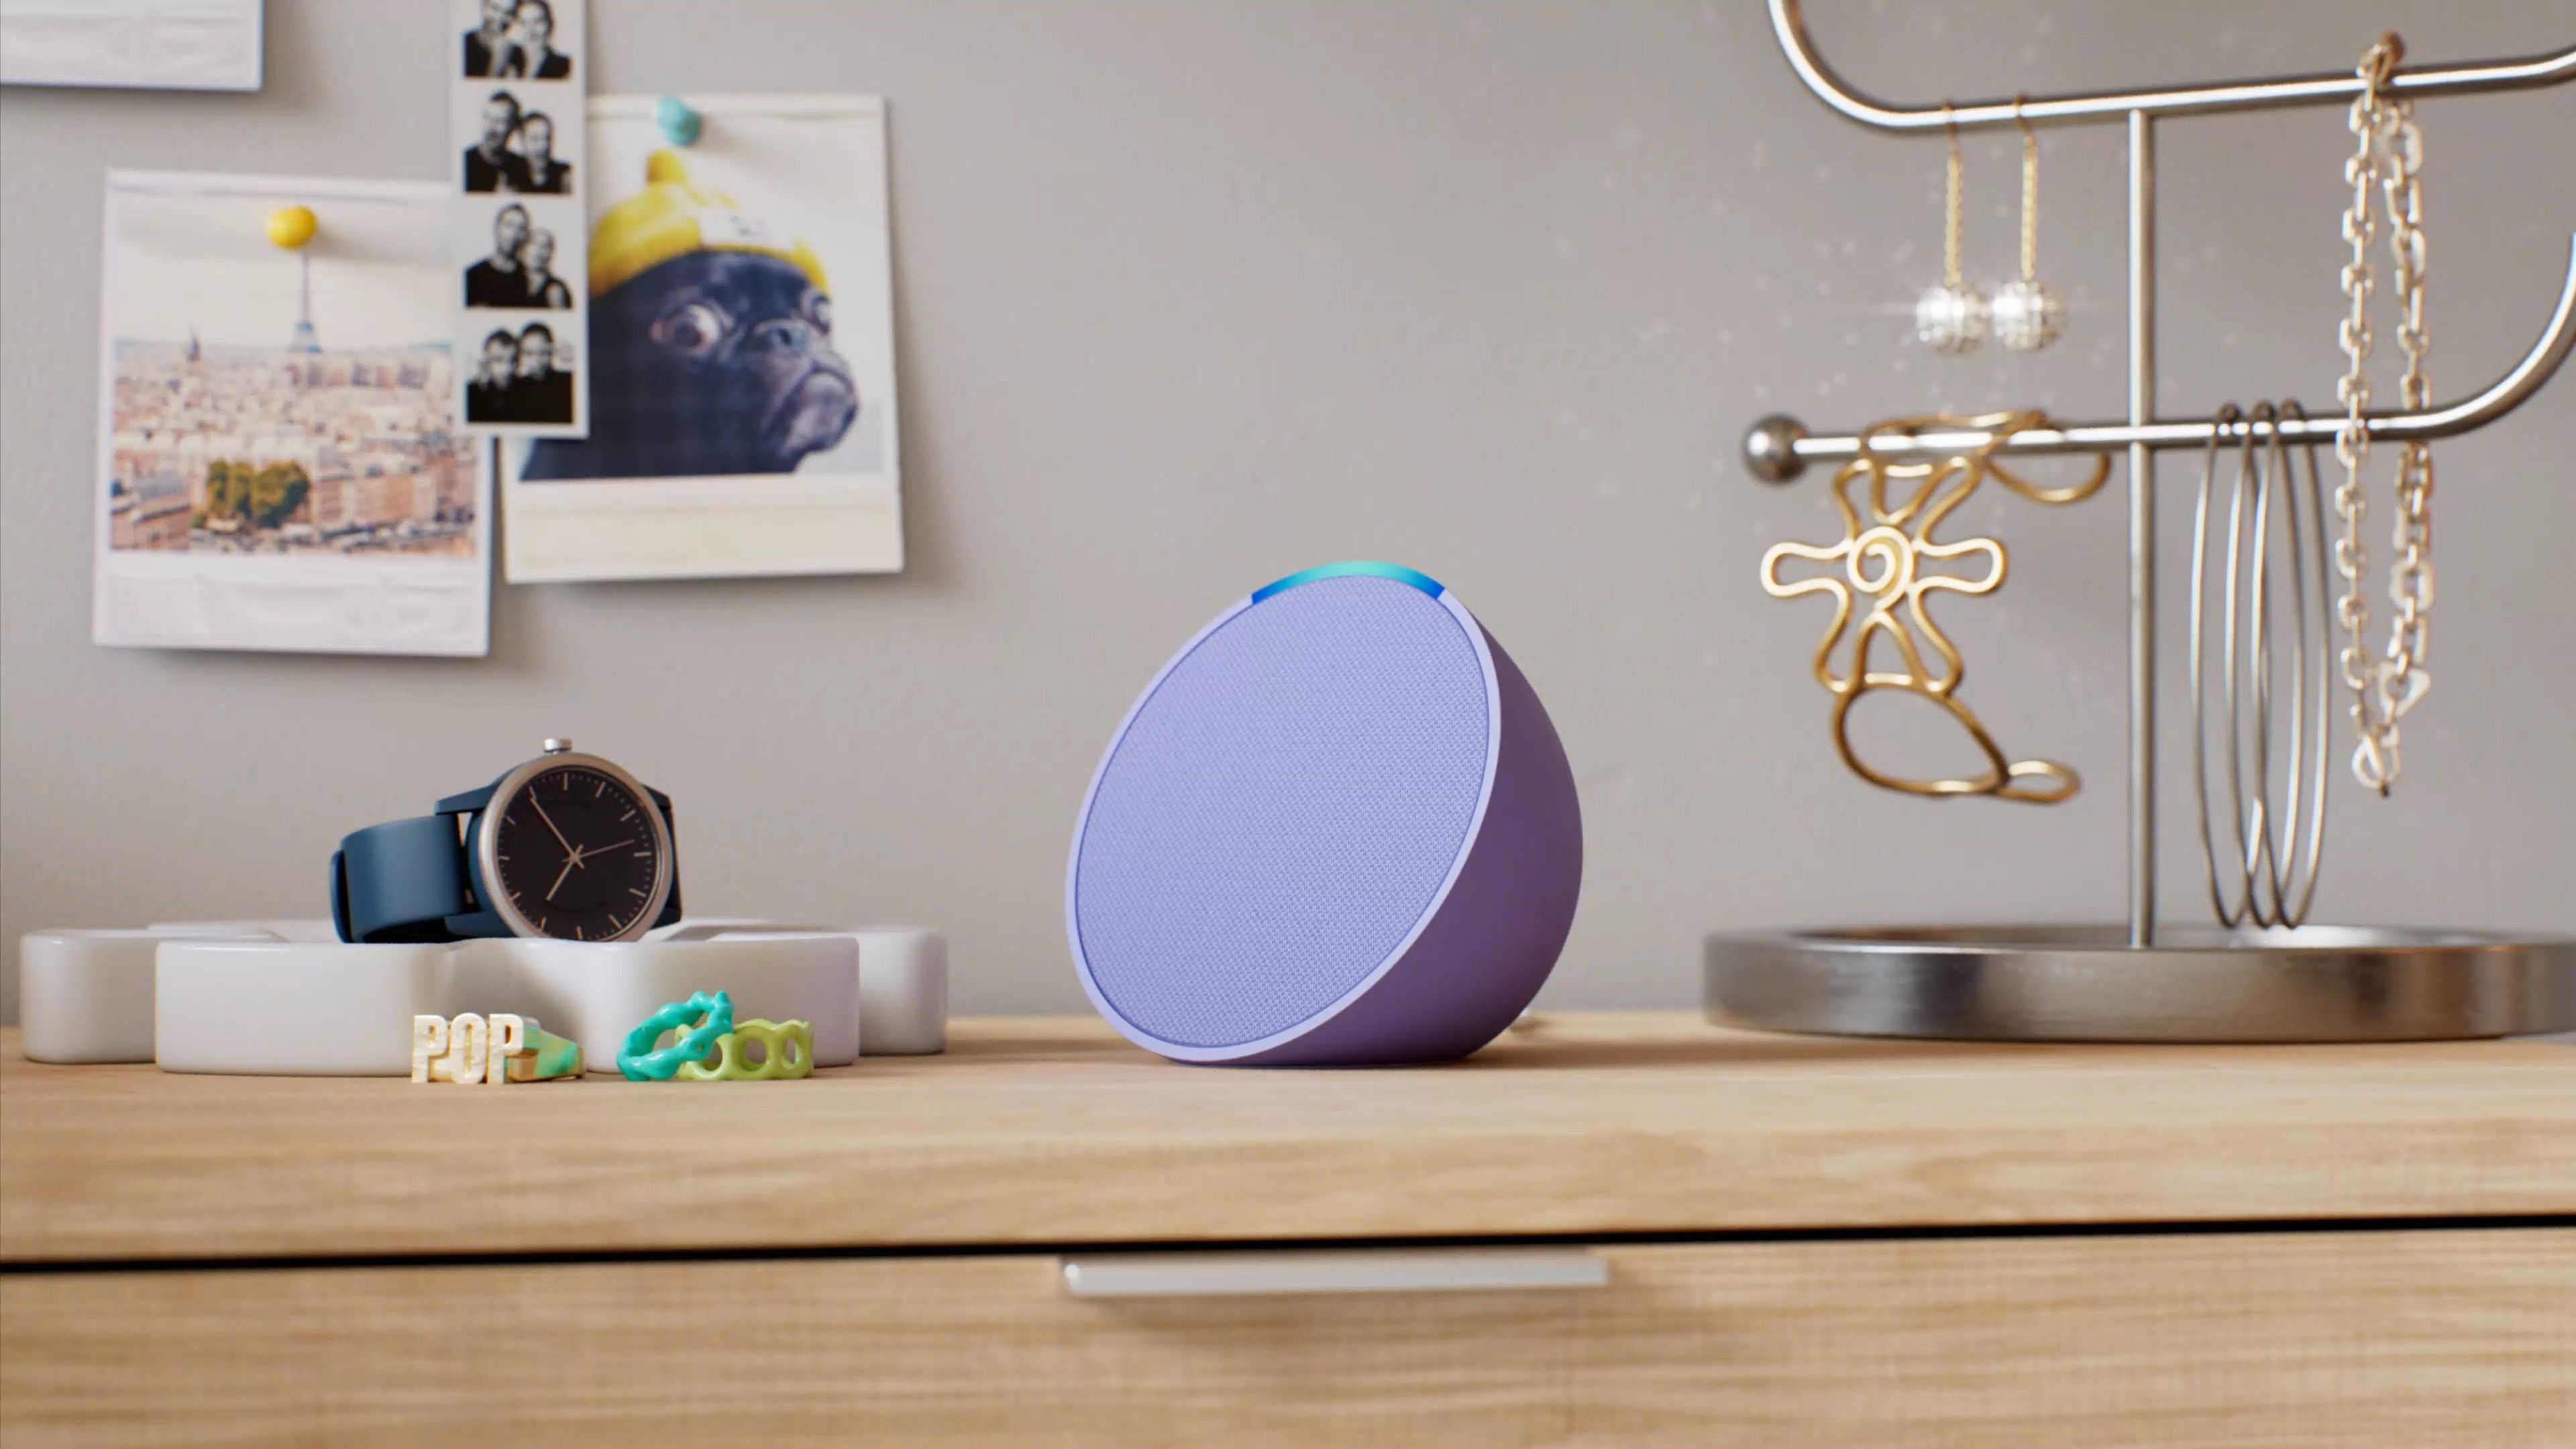 Amazon Echo Pop | Full sound compact smart speaker with Alexa | Charcoal | Amazon (US)